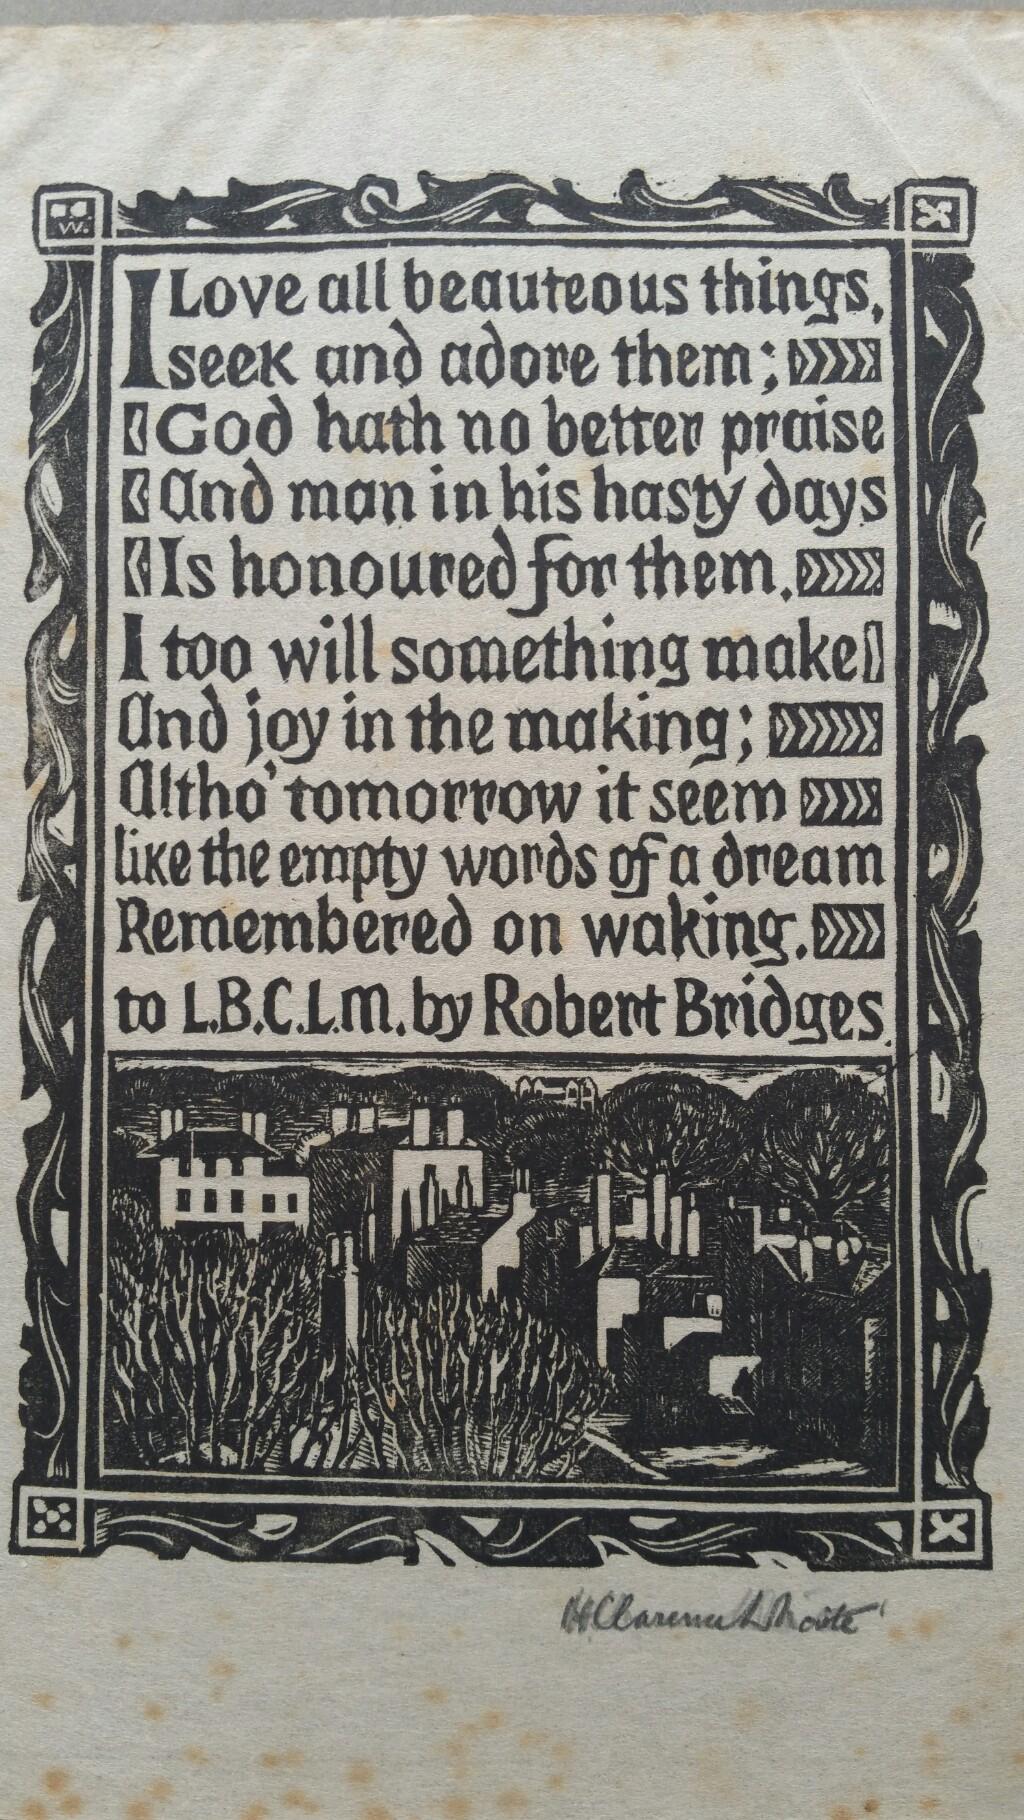 English Antique Woodcut Engraving, Signed, of Prose by Robert Bridges